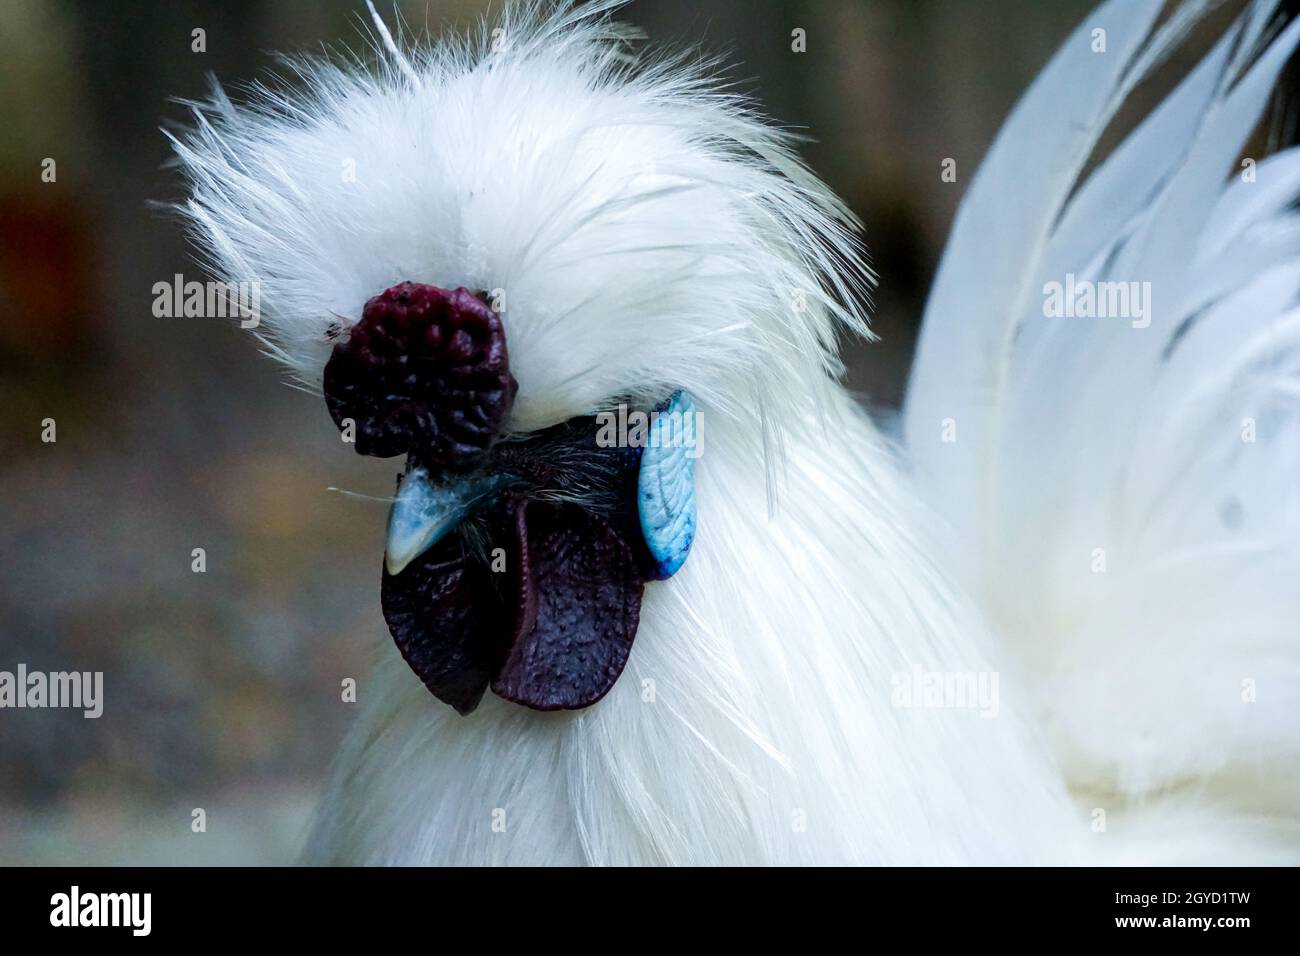 Retrato de un pollo de seda chino con plumaje esponjoso Foto de stock